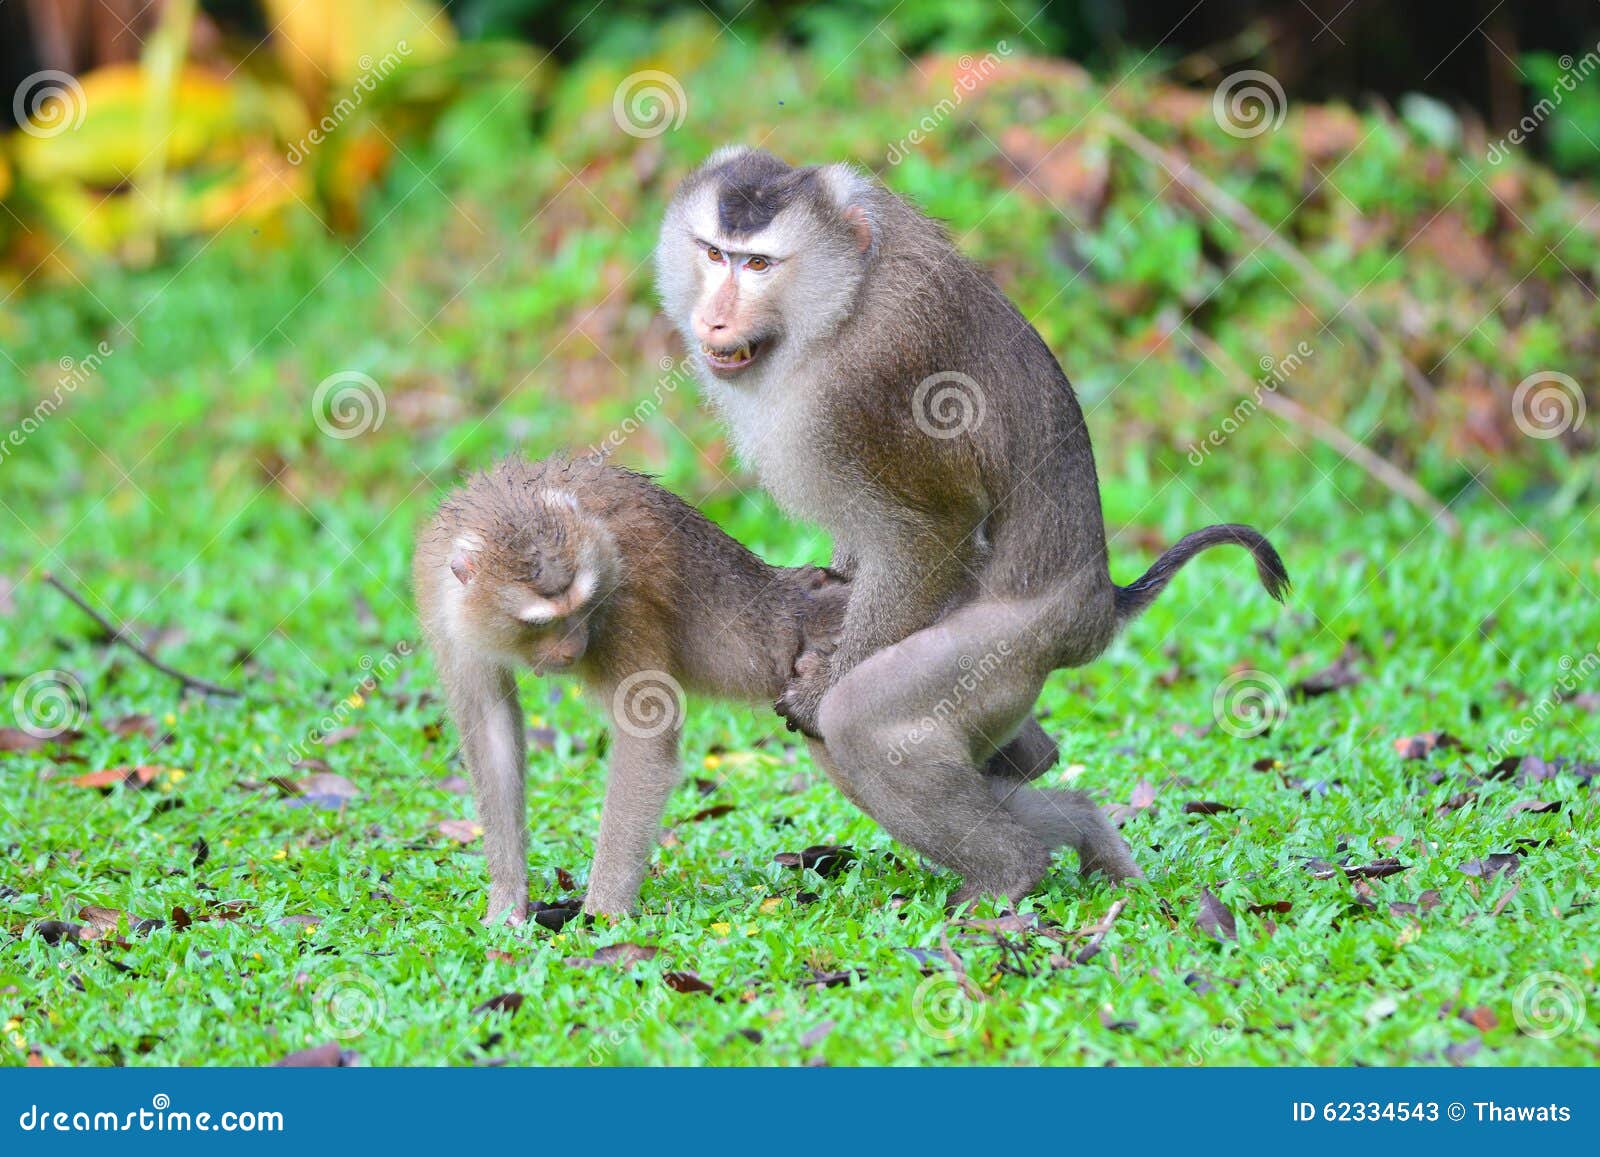 mating a monkey